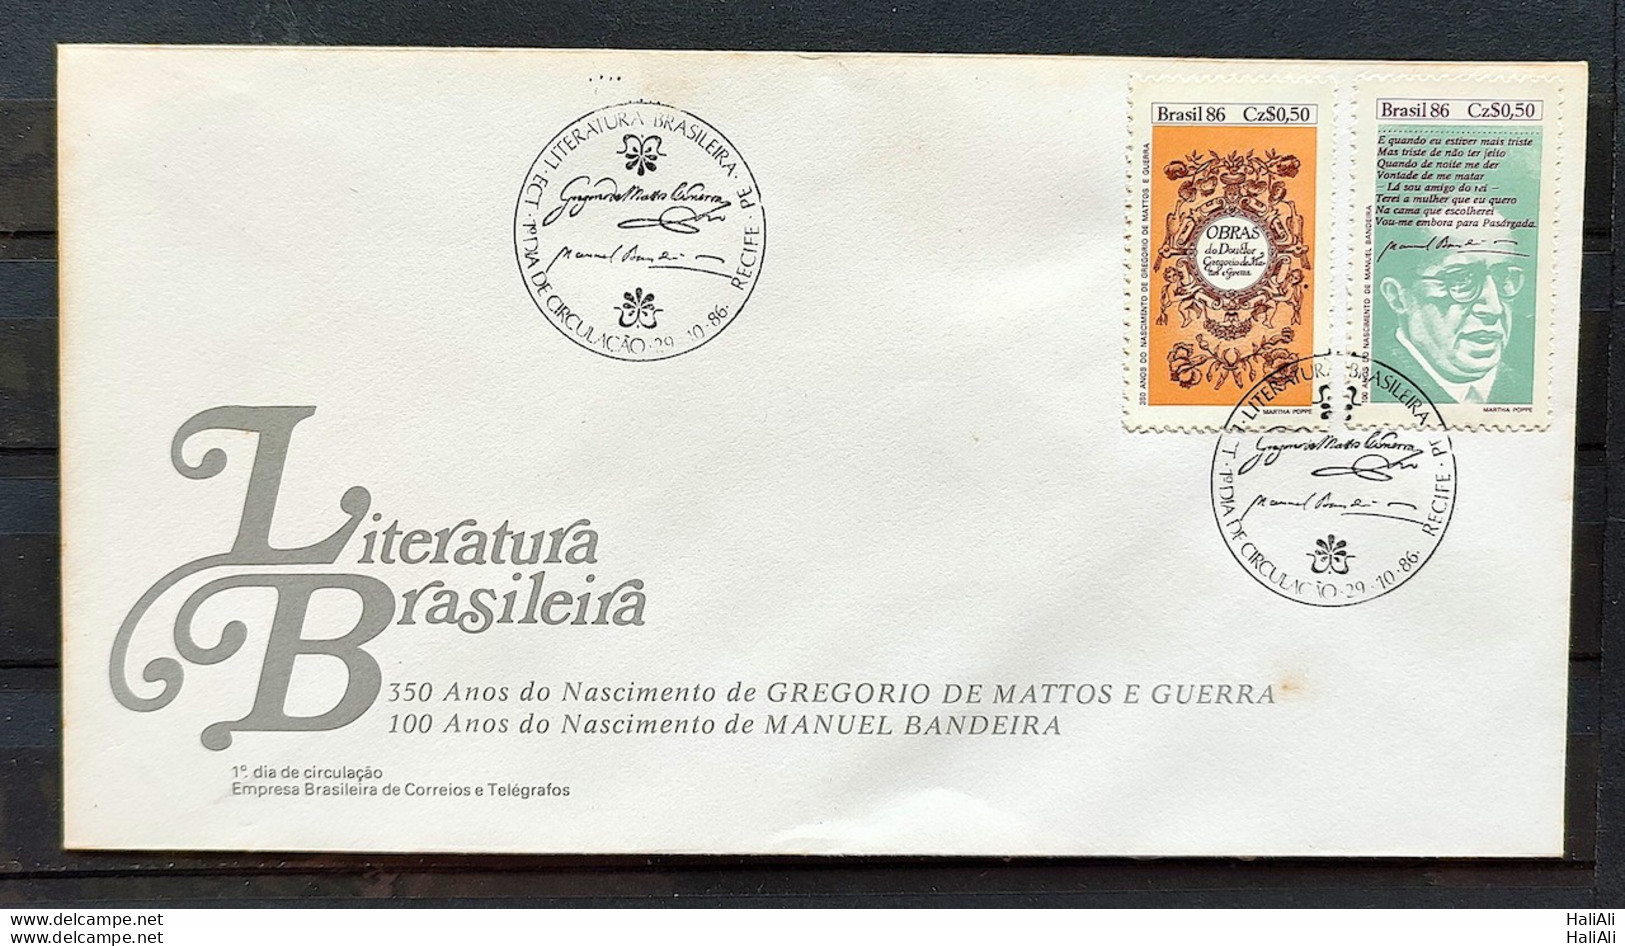 Brazil Envelope FDC 406 1986 Book Day Literature Manuel Bandeira CBC PE 01 - FDC